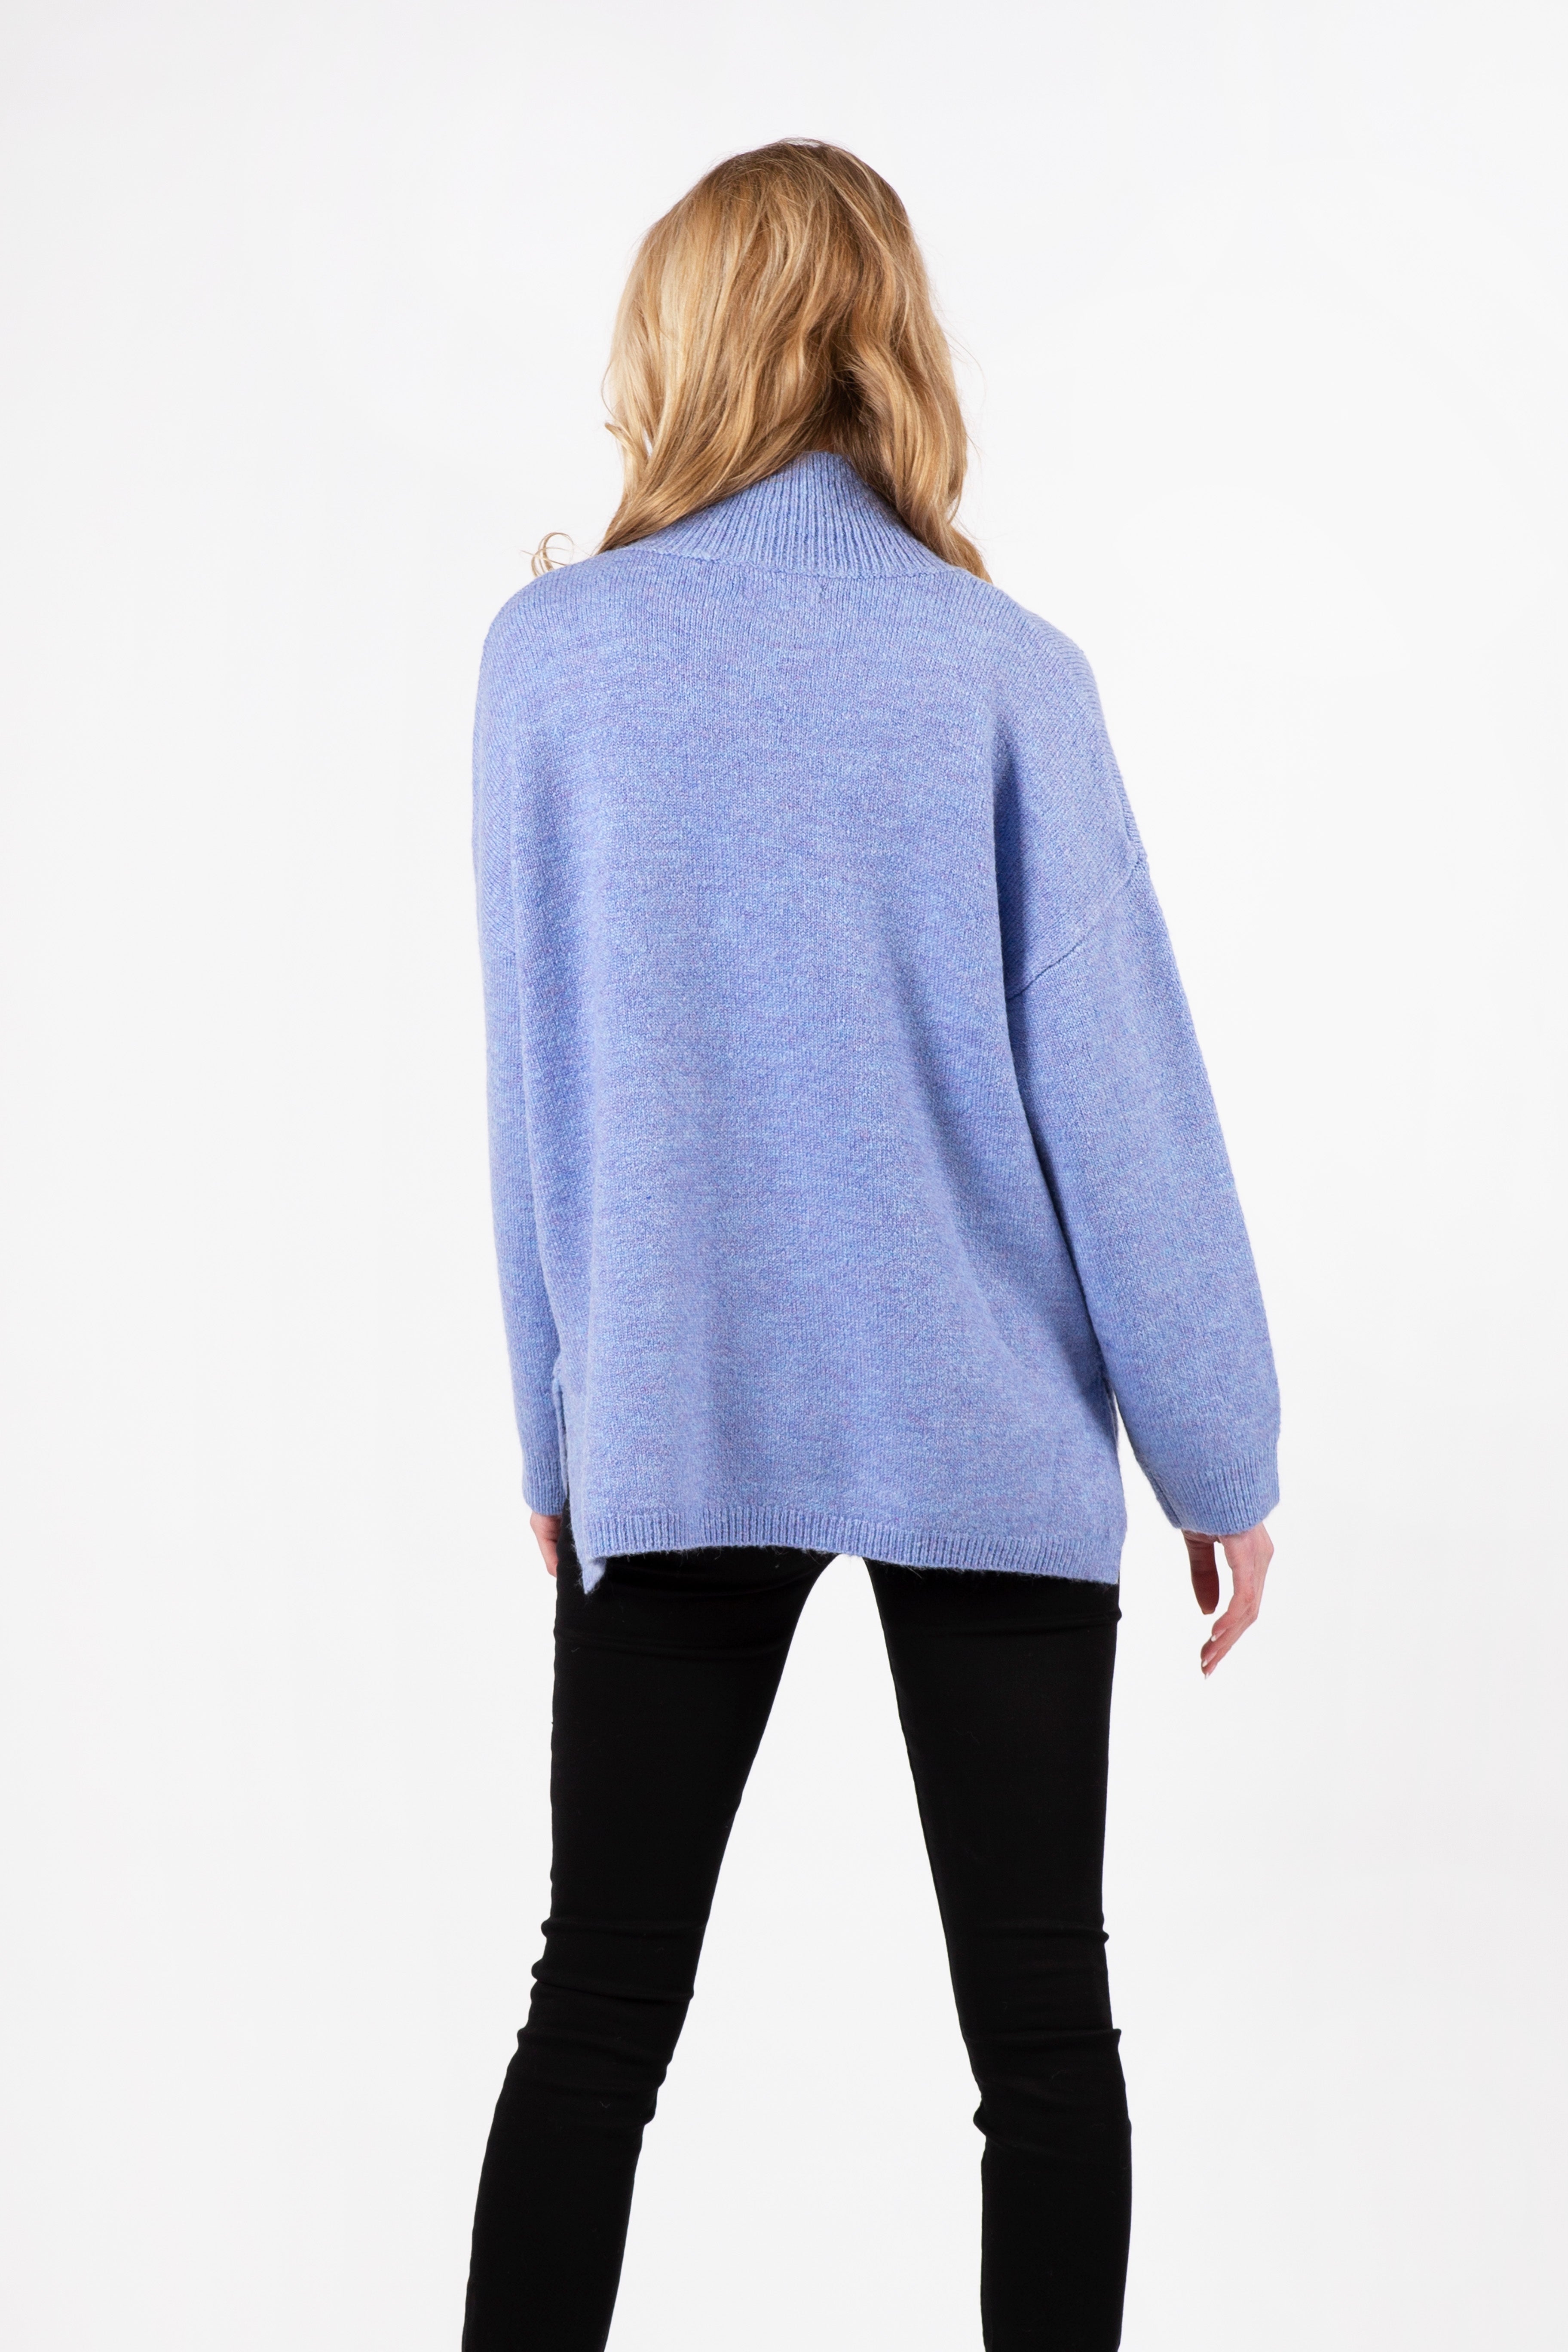 Lyla + Luxe Tulu Oversize Mock Neck Sweater is like a warm hug.  The Periwinkle blue looks fantastic with a dark jean. 